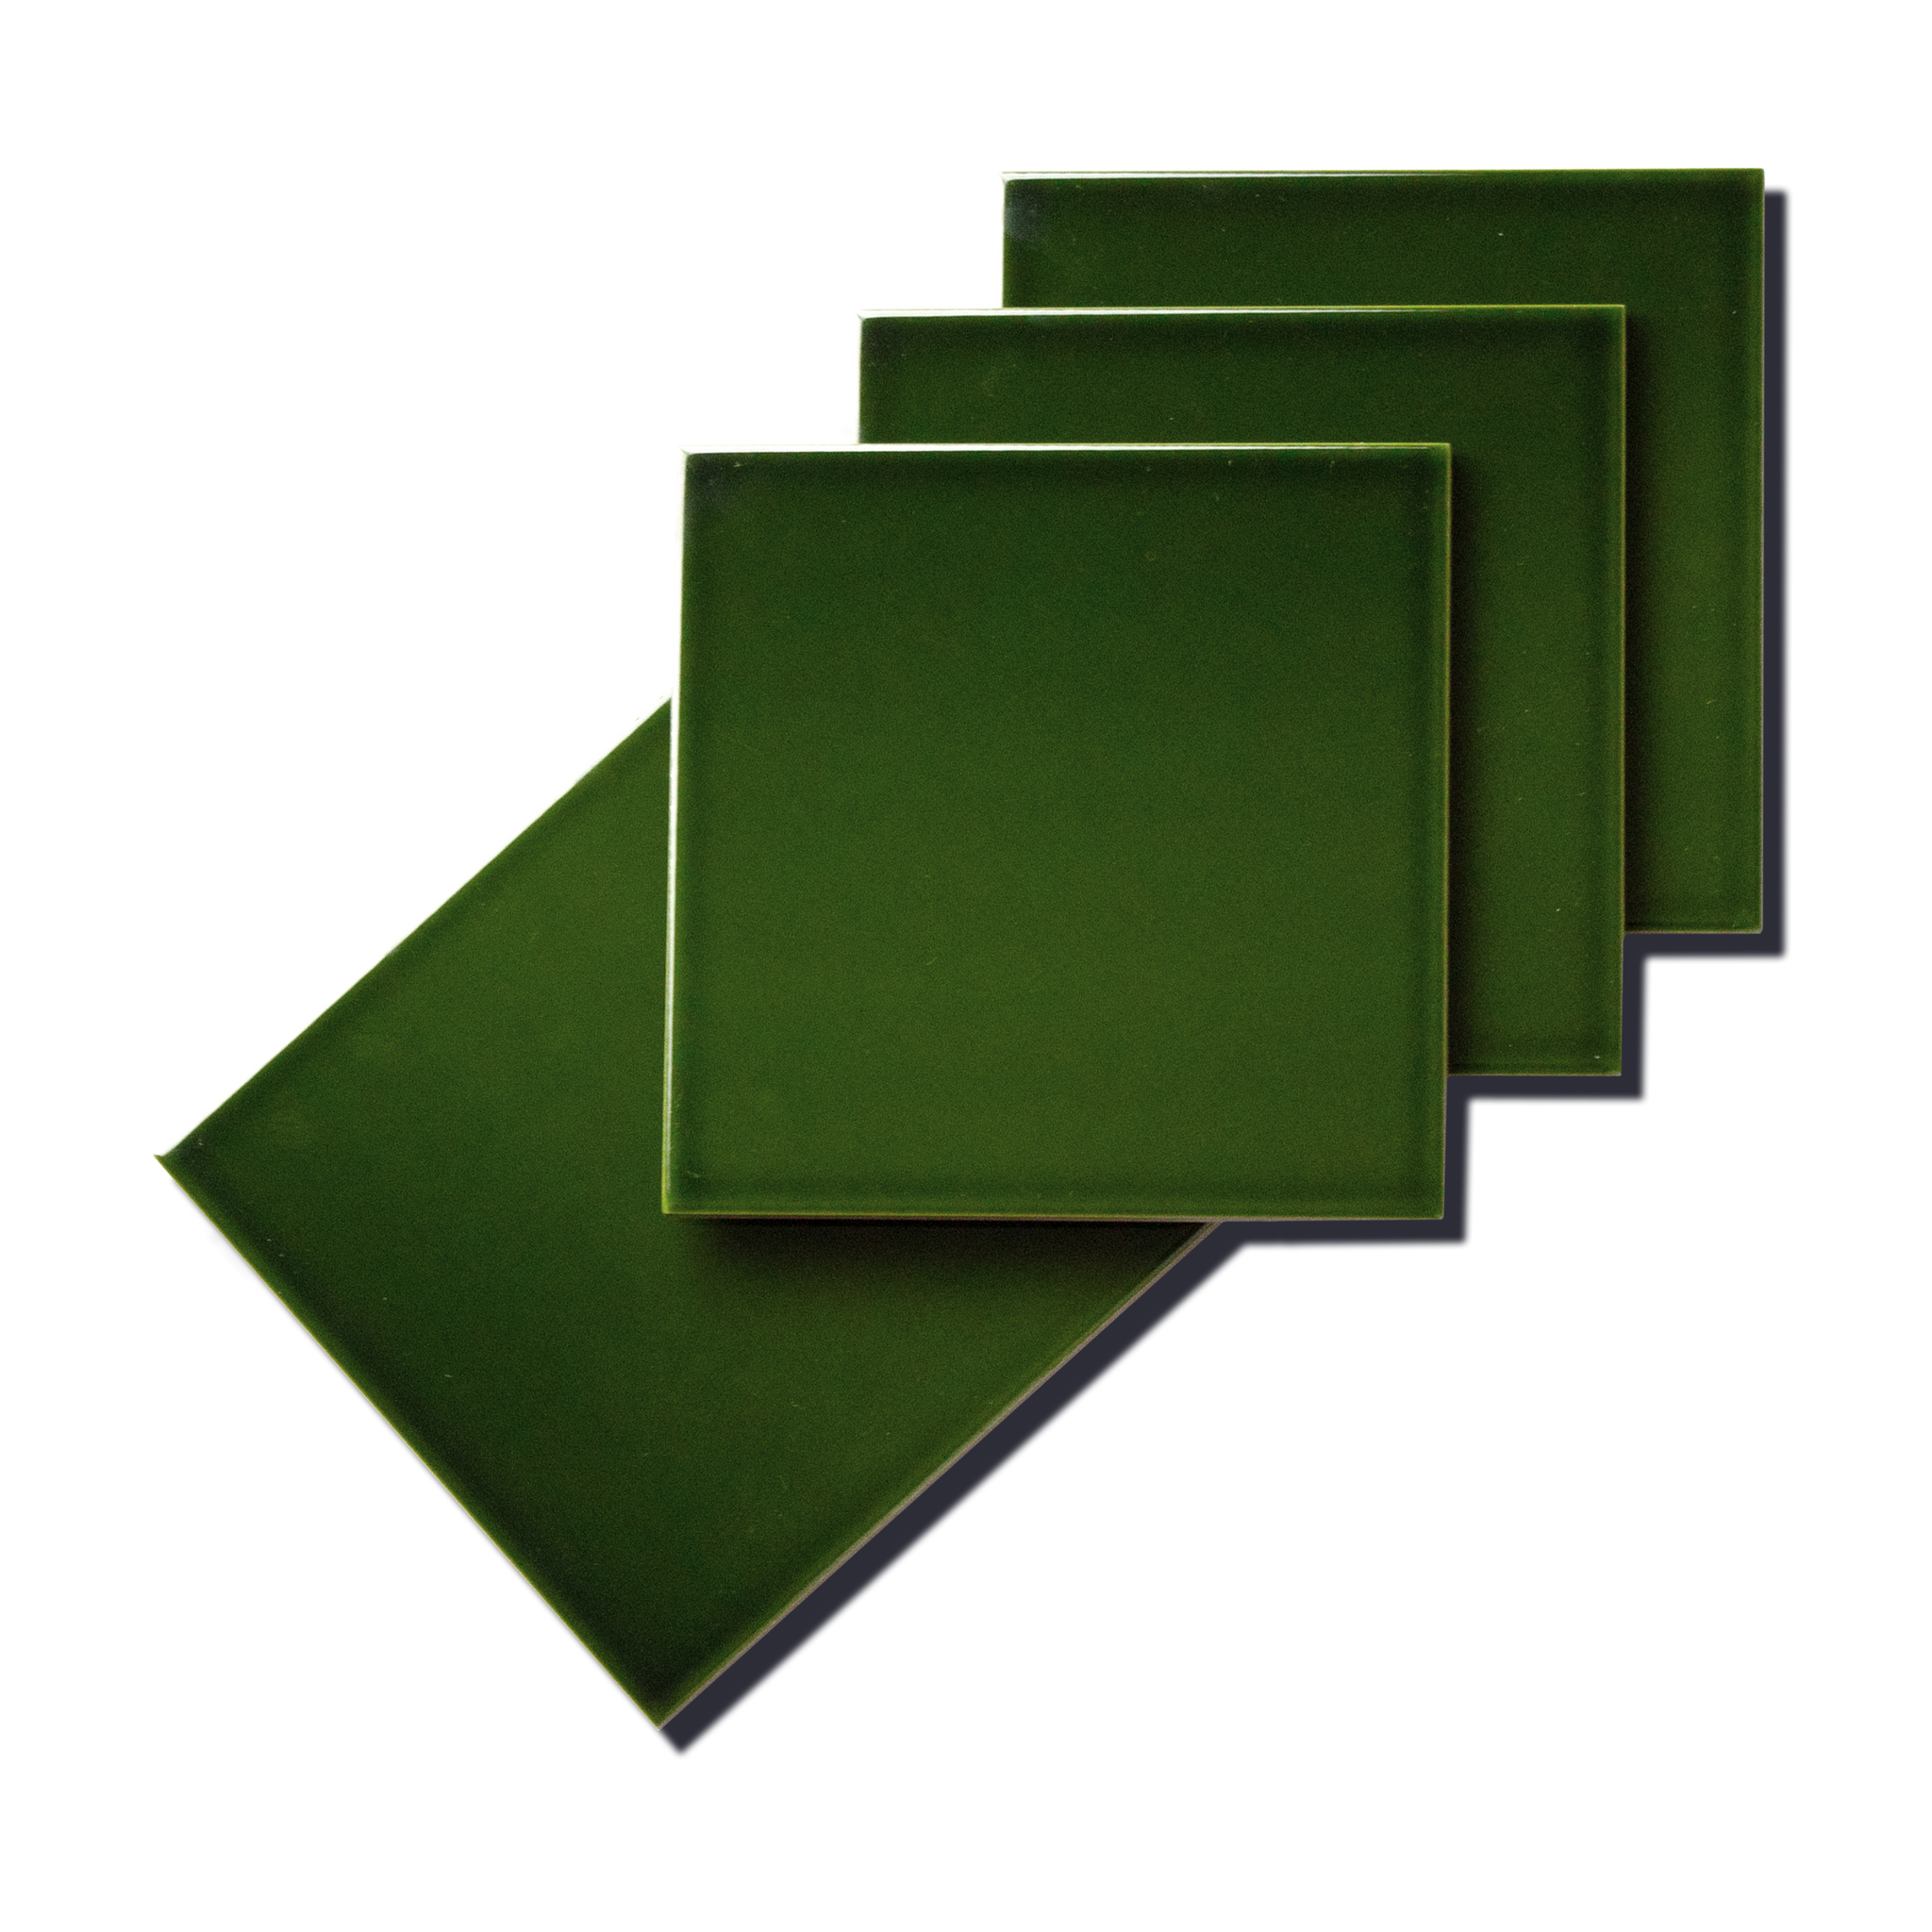 Emerald Green 6x6